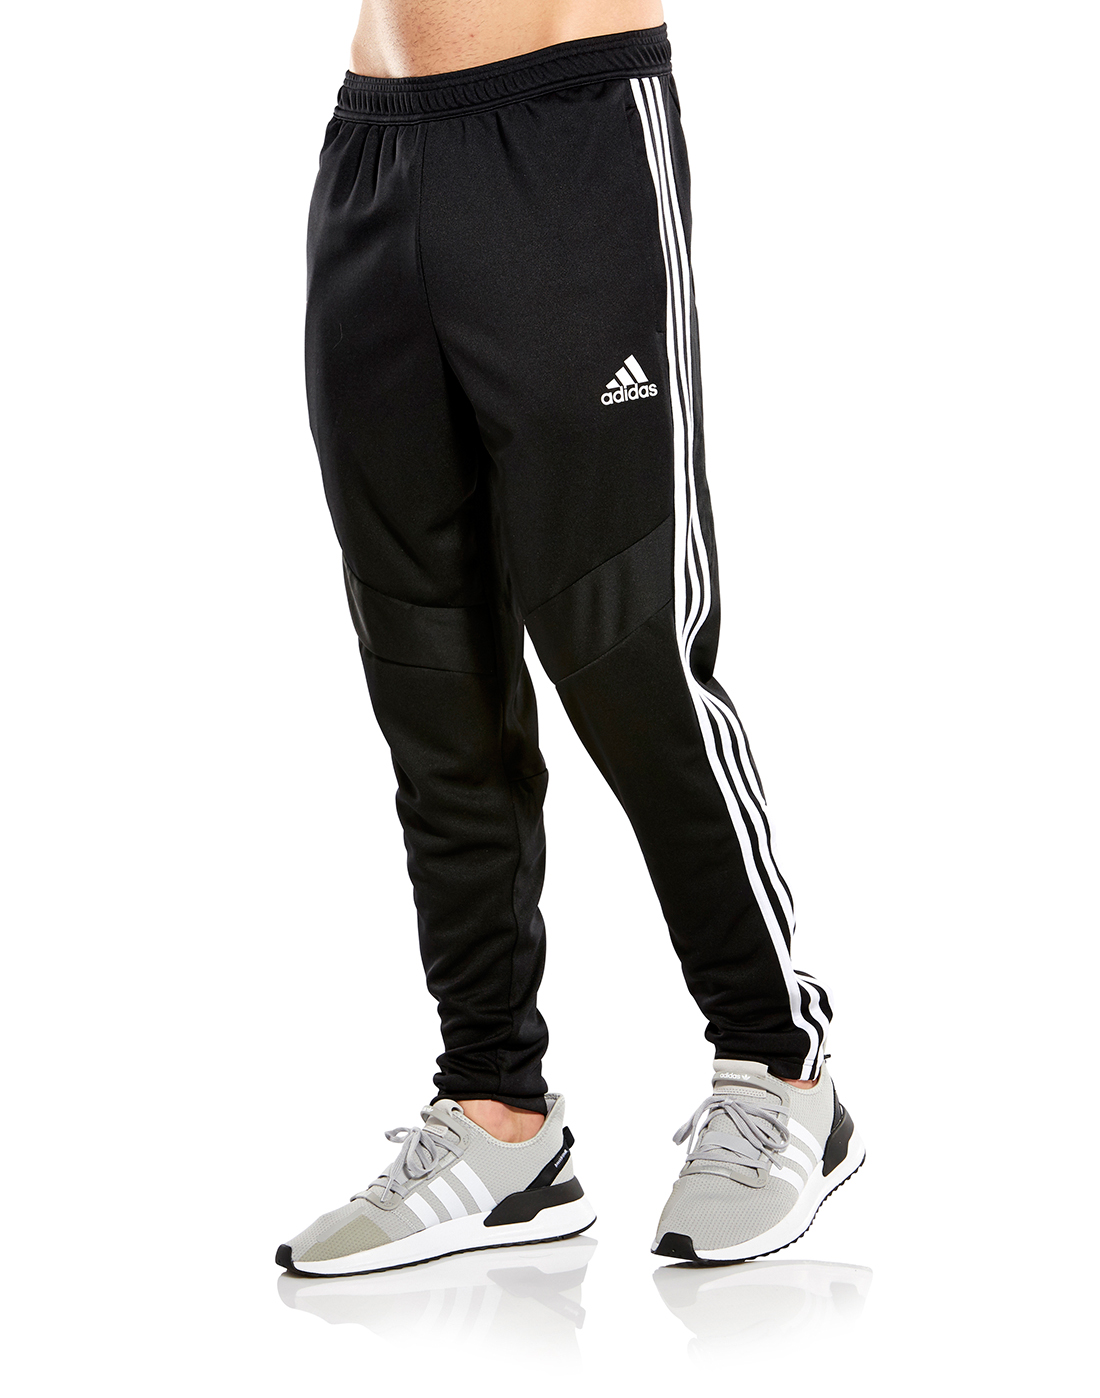 Men's Black adidas Tiro 19 Track Pants | Life Style Sports